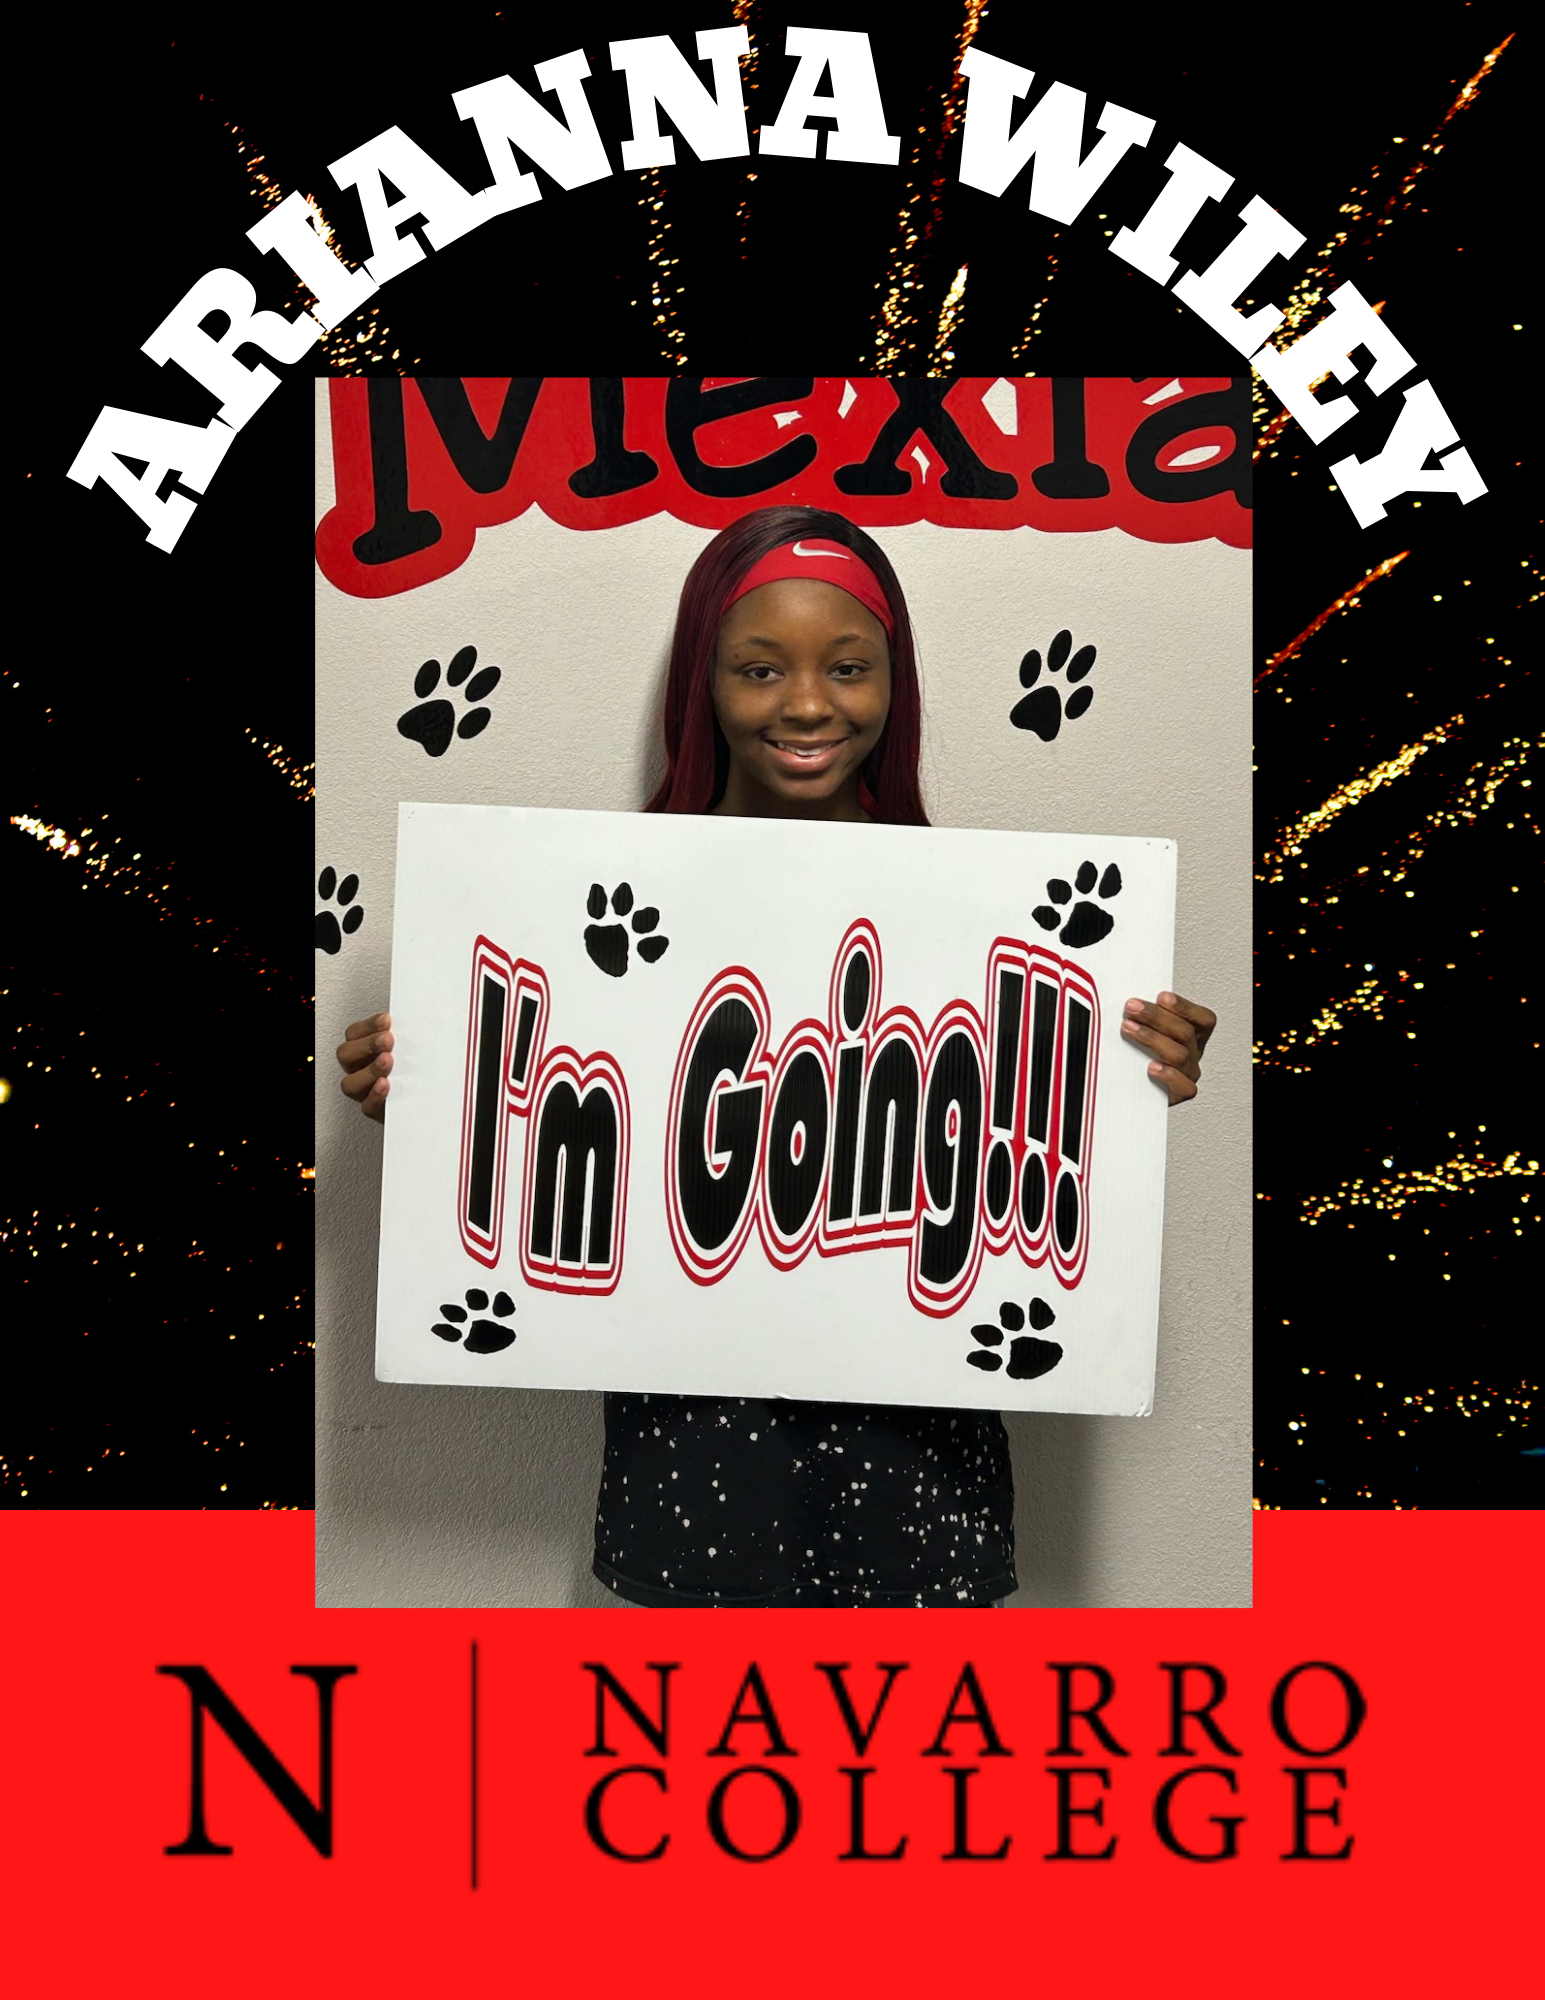 Arianna Wiley - I'm Going! - Navarro College